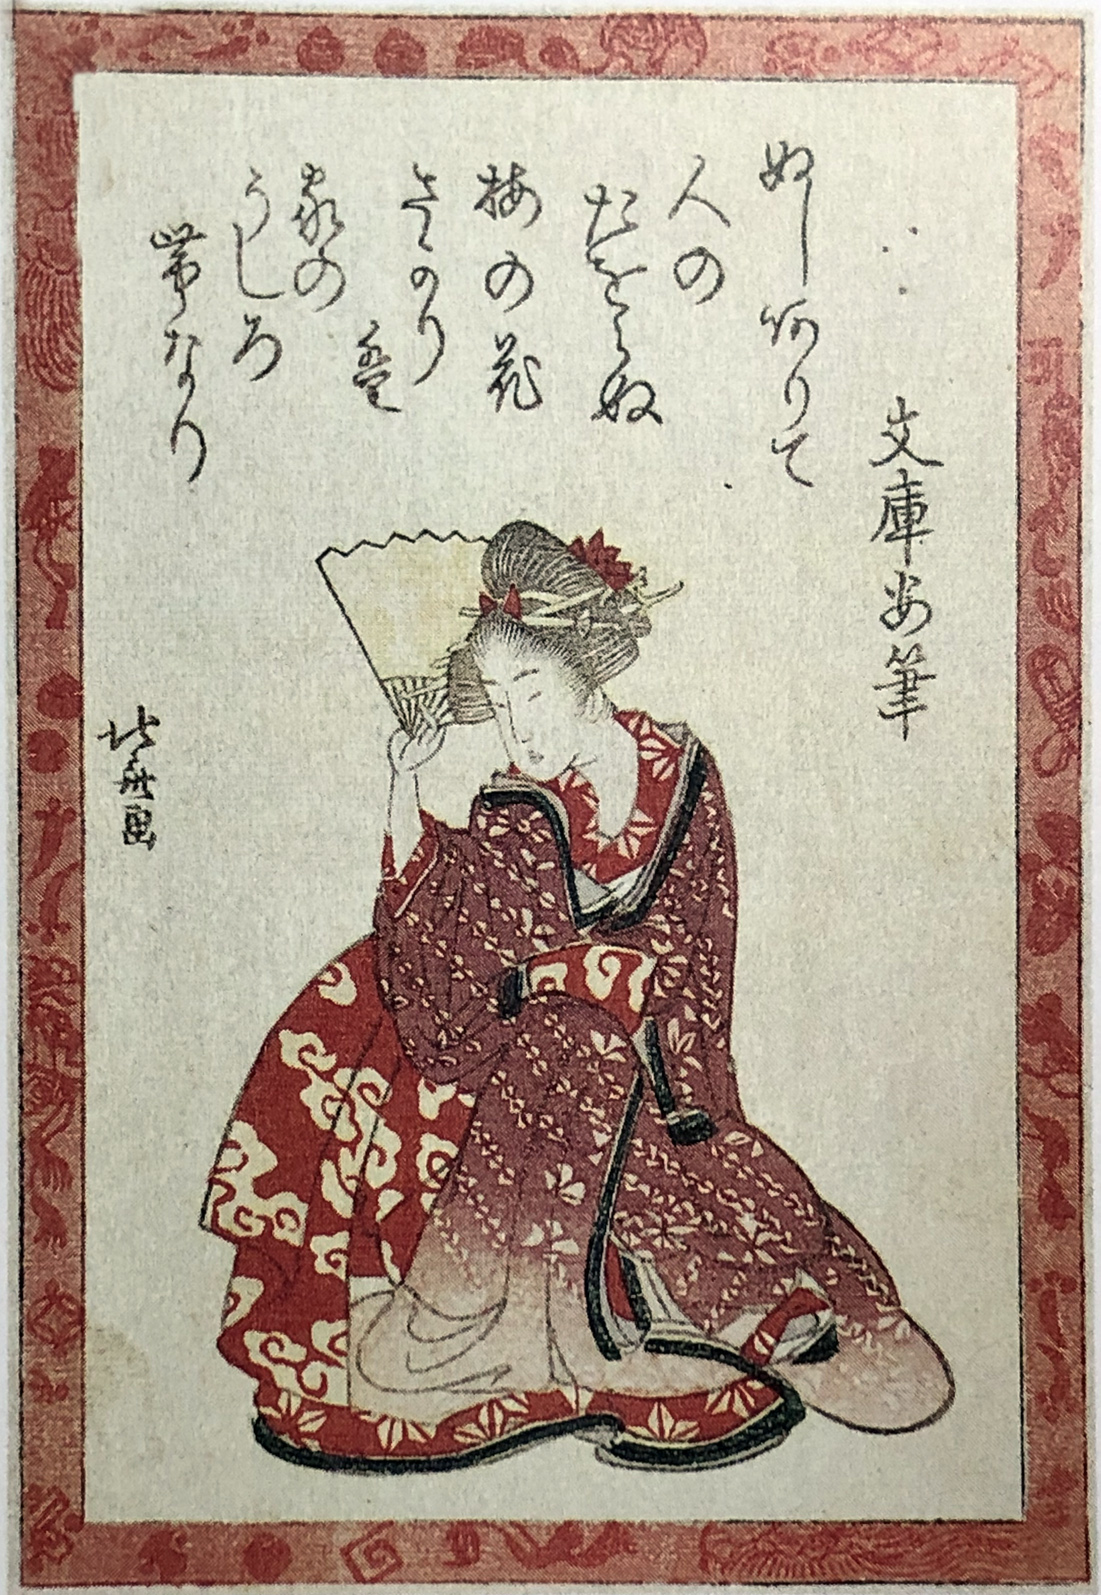 Hokusai - Poet #49 - 100 Kyoka Poets